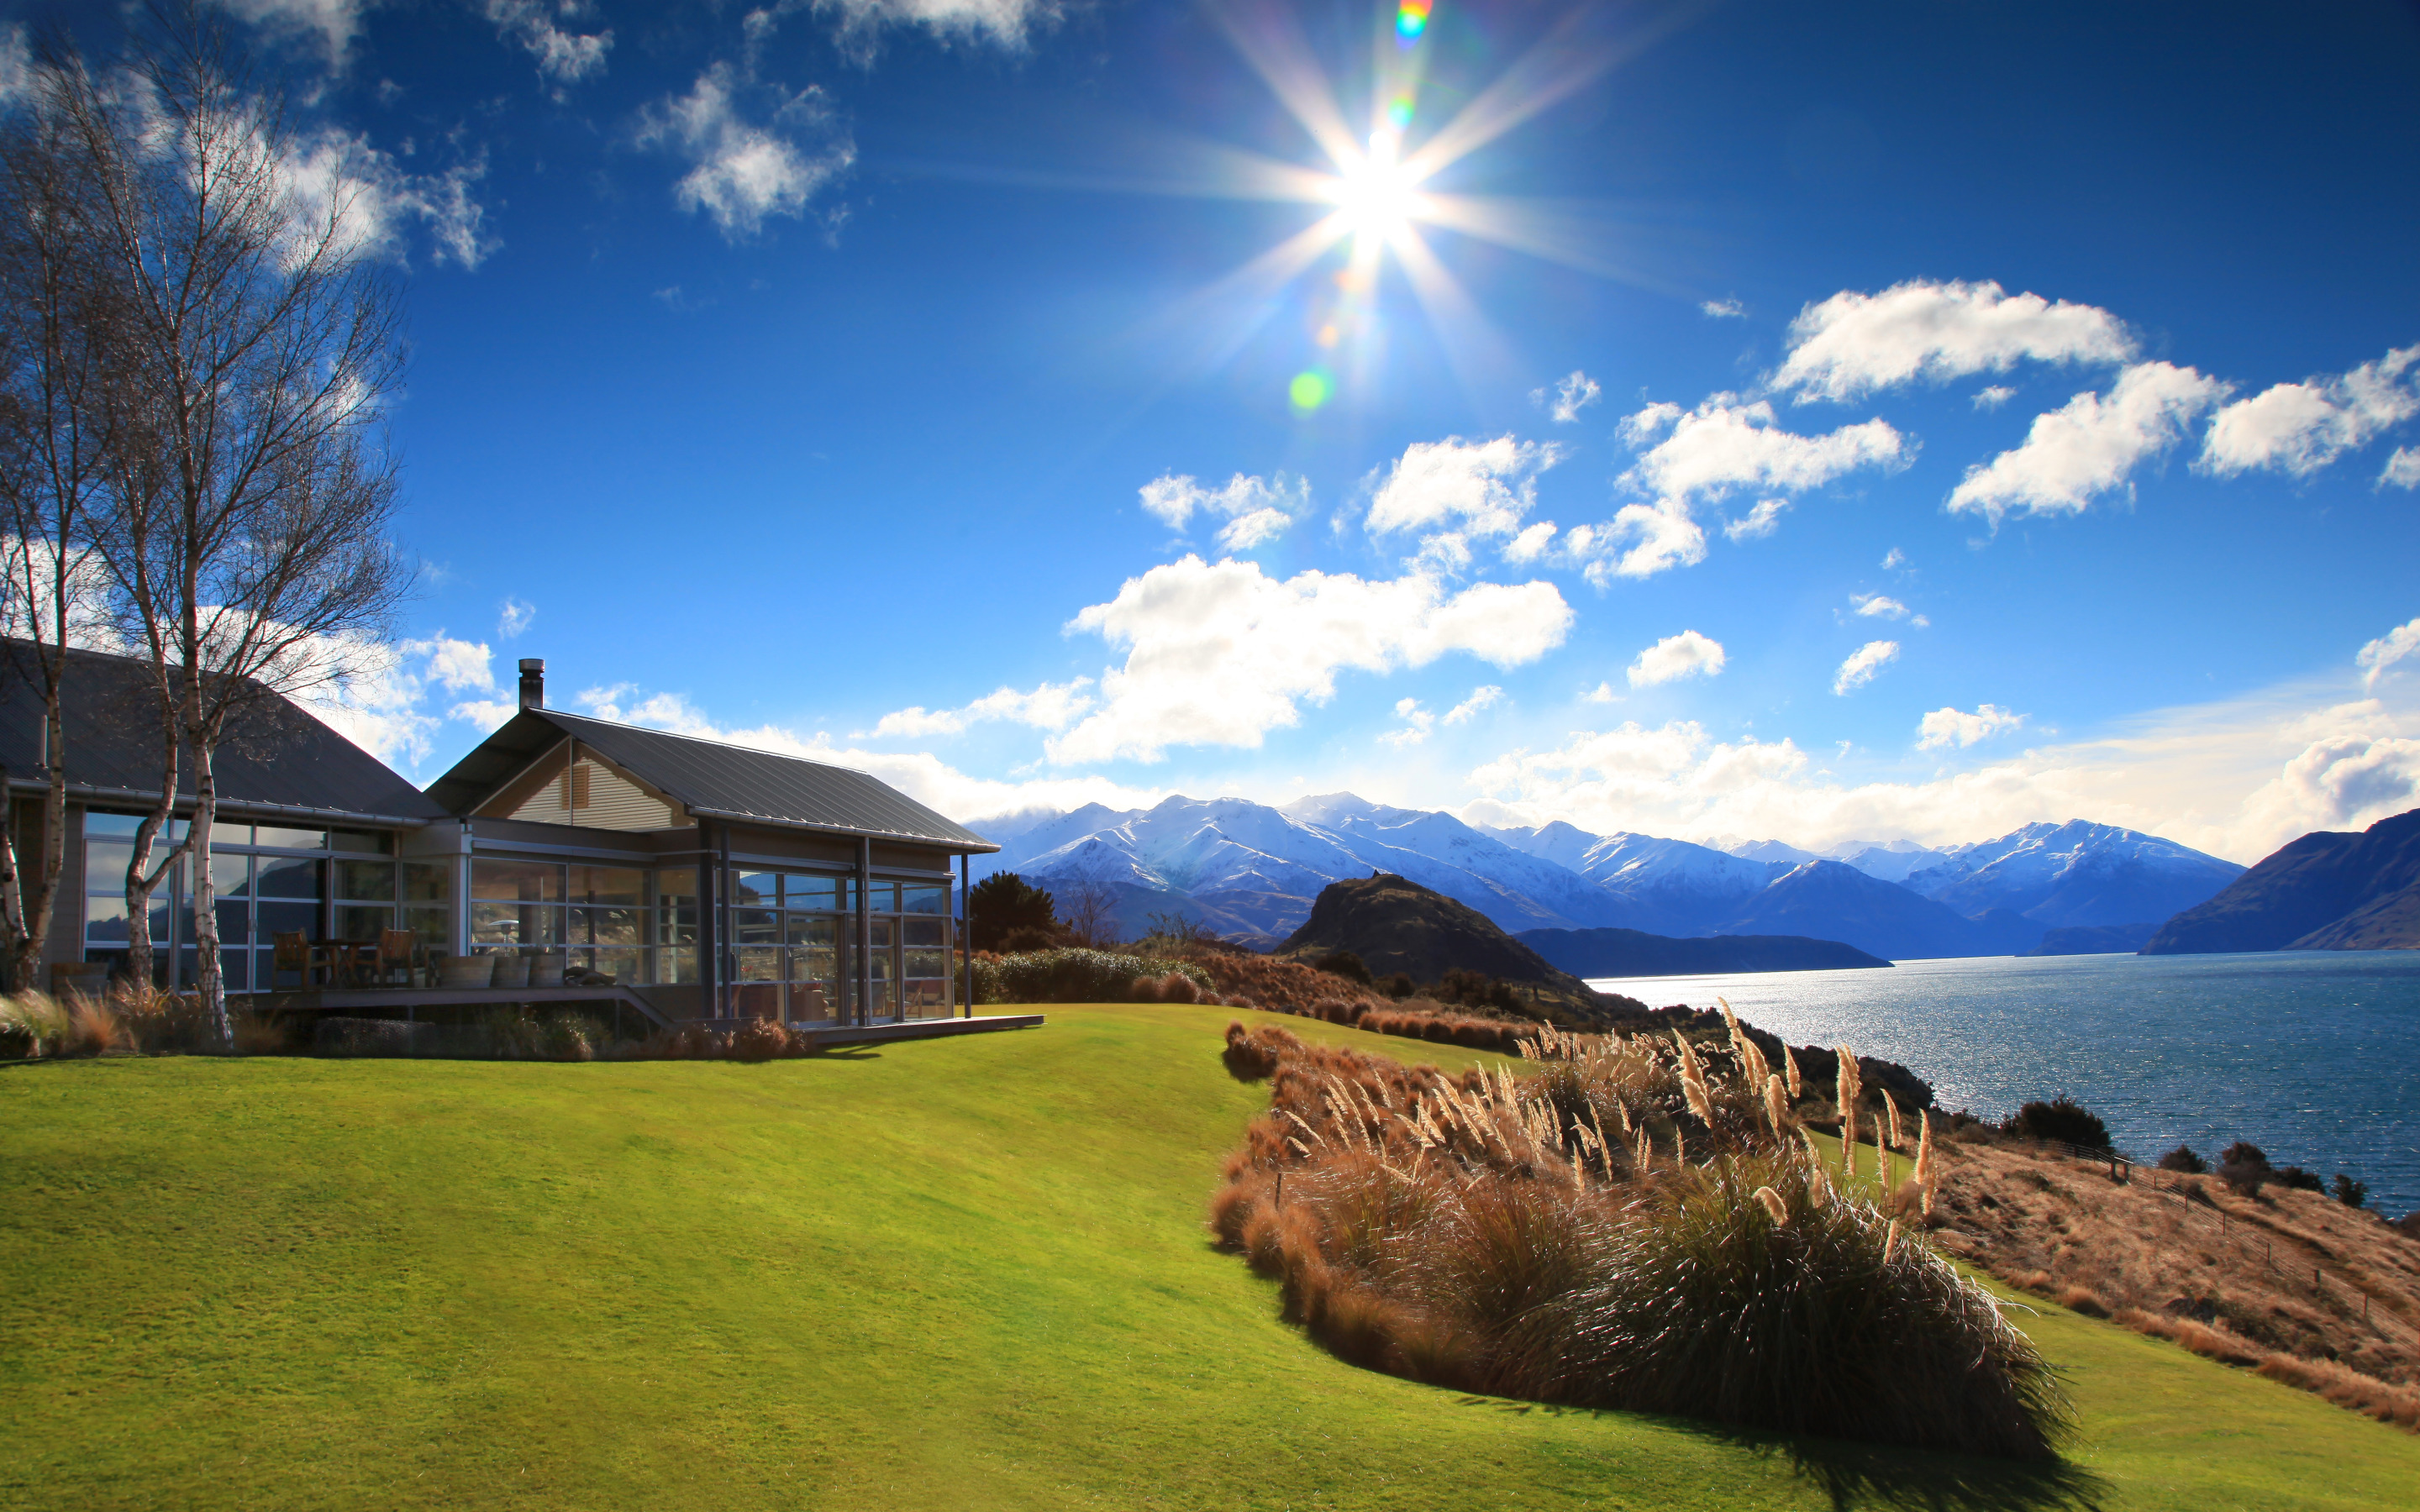 В теплых краях живет. Шале whare Kea, новая Зеландия. Новая Зеландия деревня в горах. Новая Зеландия Южный остров домики. Новая Зеландия дом на горе Окленд.